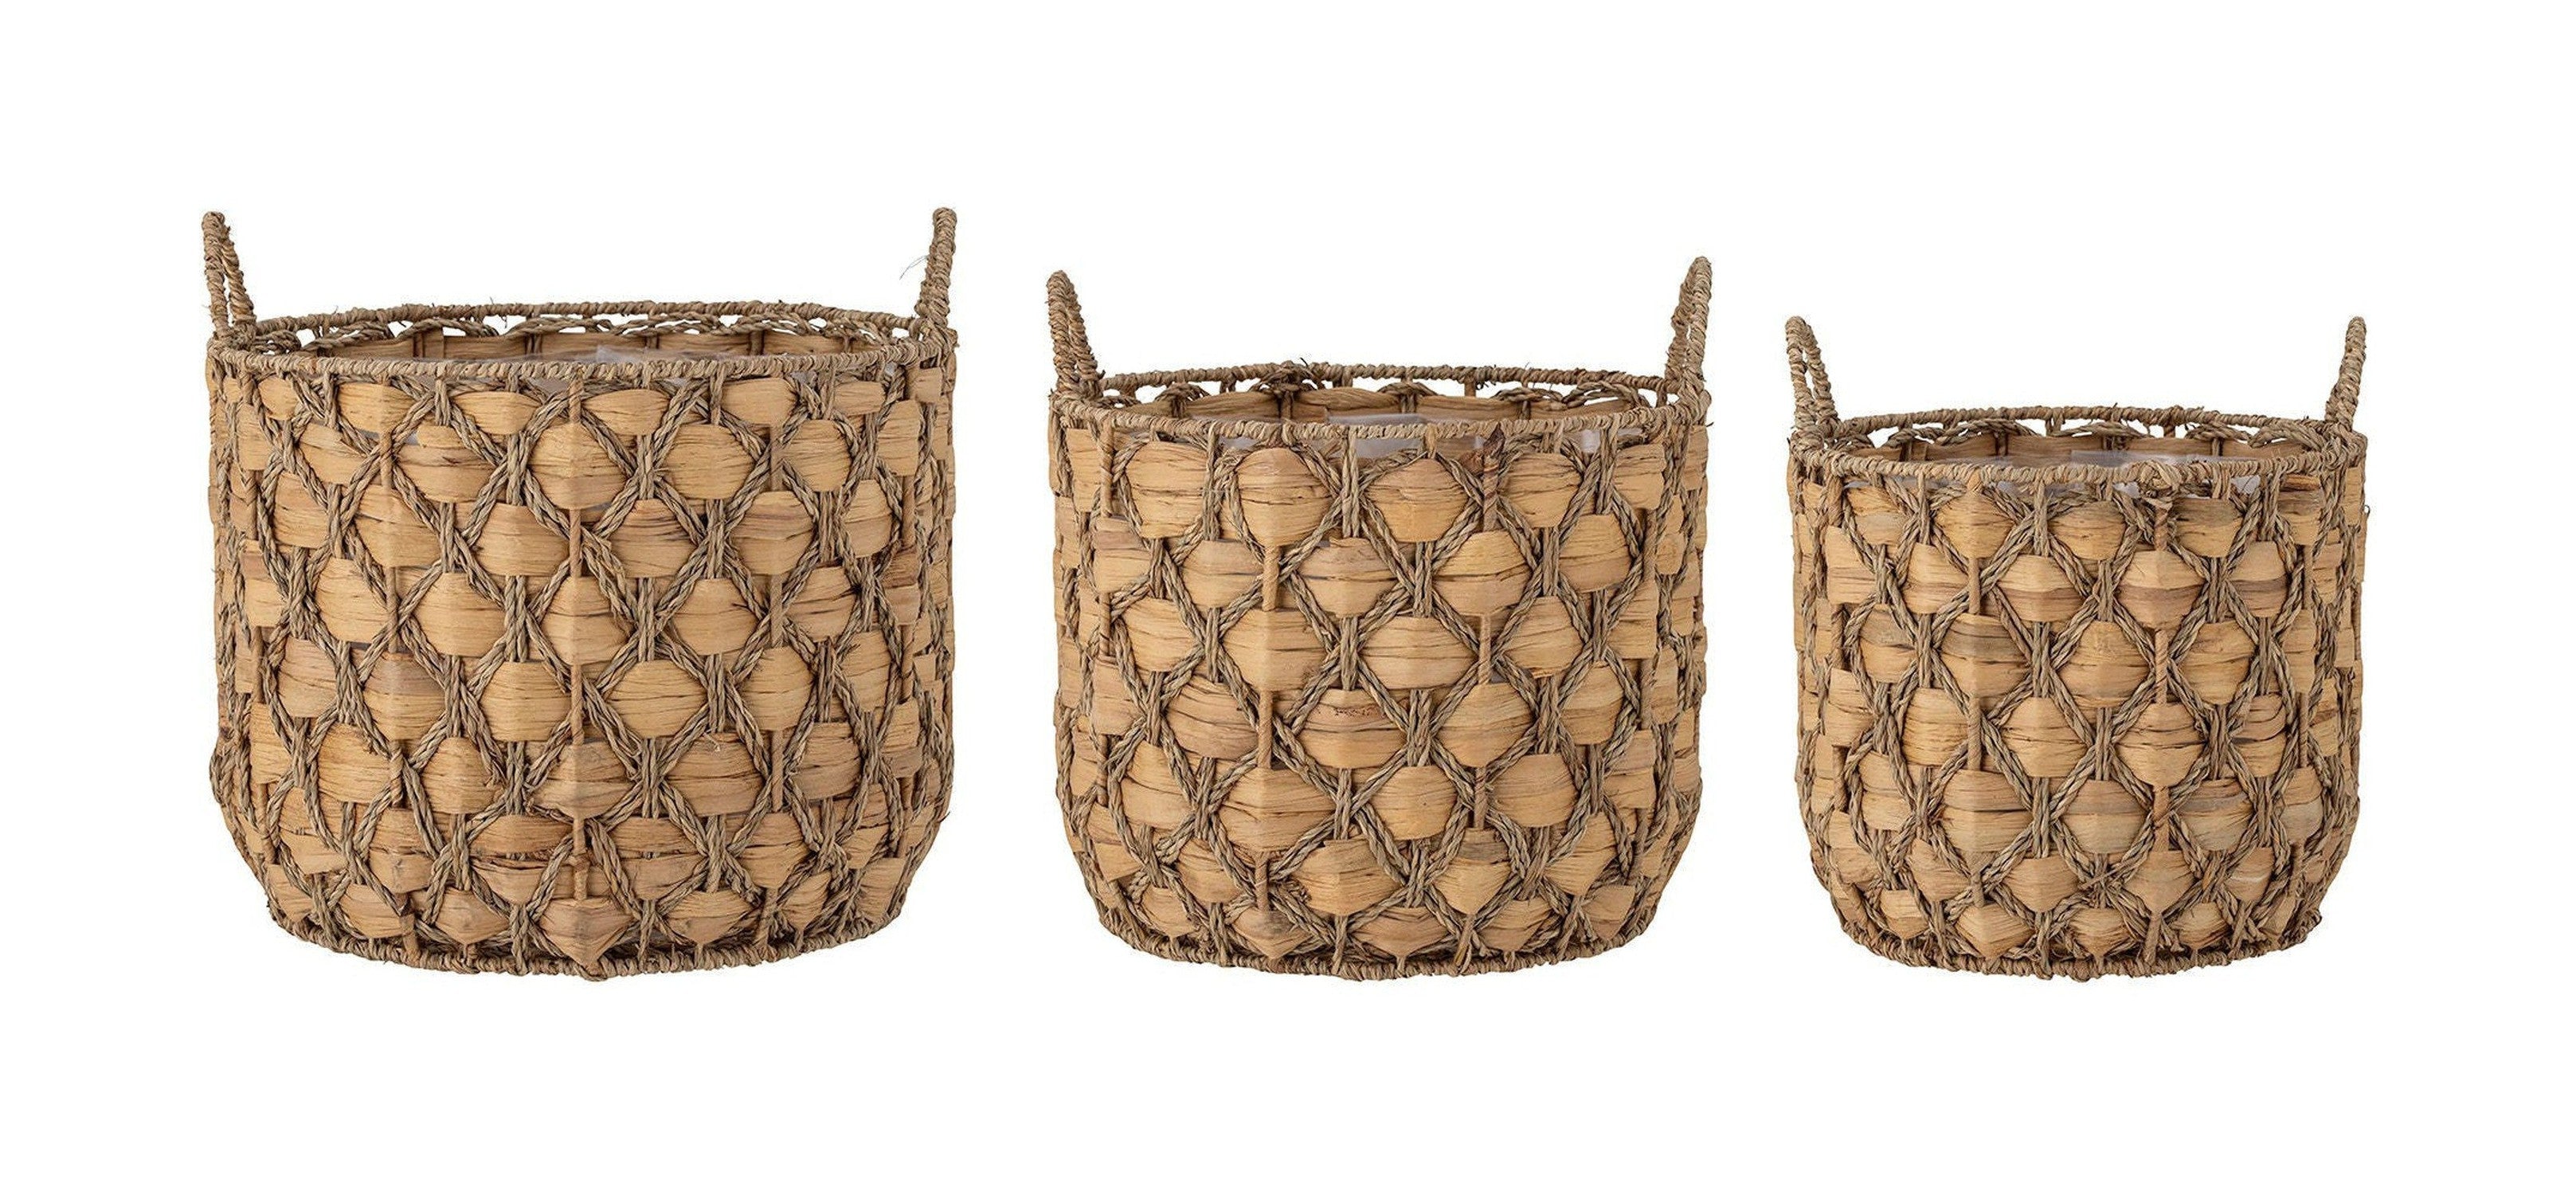 Creative Collection Joleen Basket, Nature, Water Hyacinth